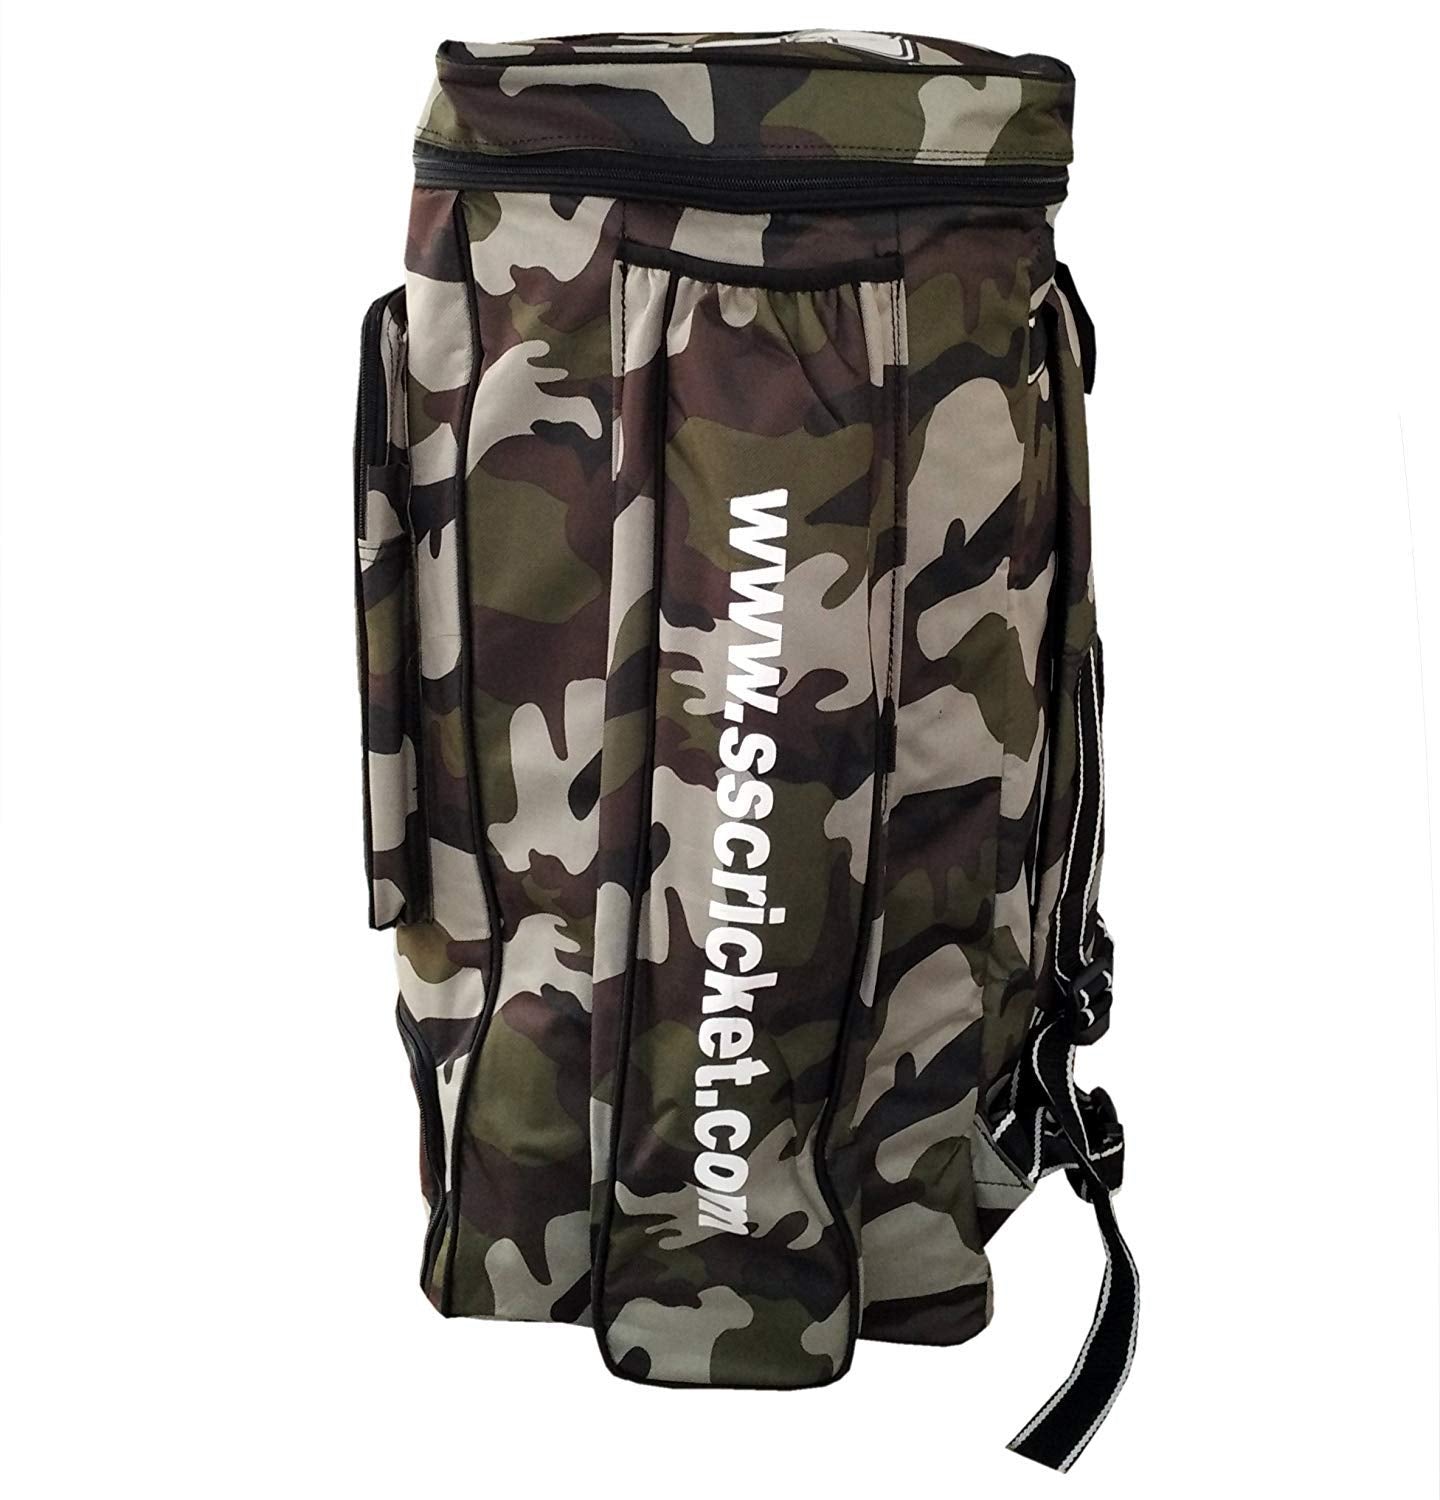 SS Cricket Kit Bag Camo Duffle (Green Camo) - Best Price online Prokicksports.com